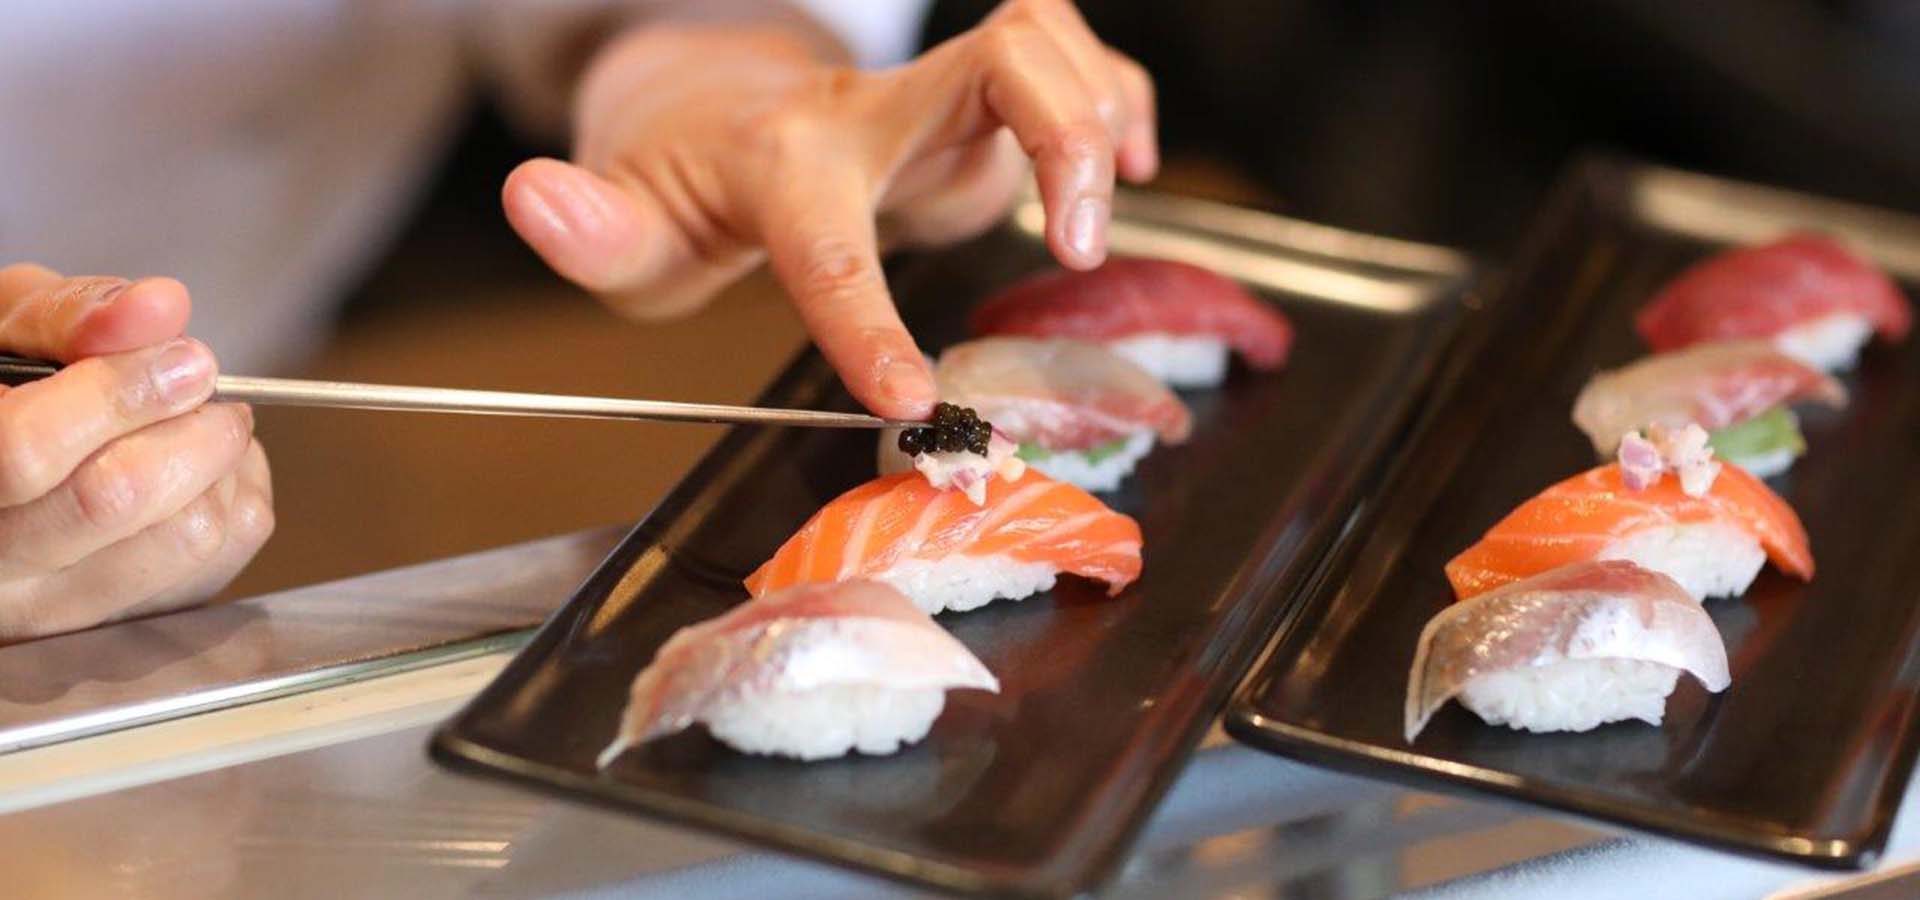 Display of prepared sushi.